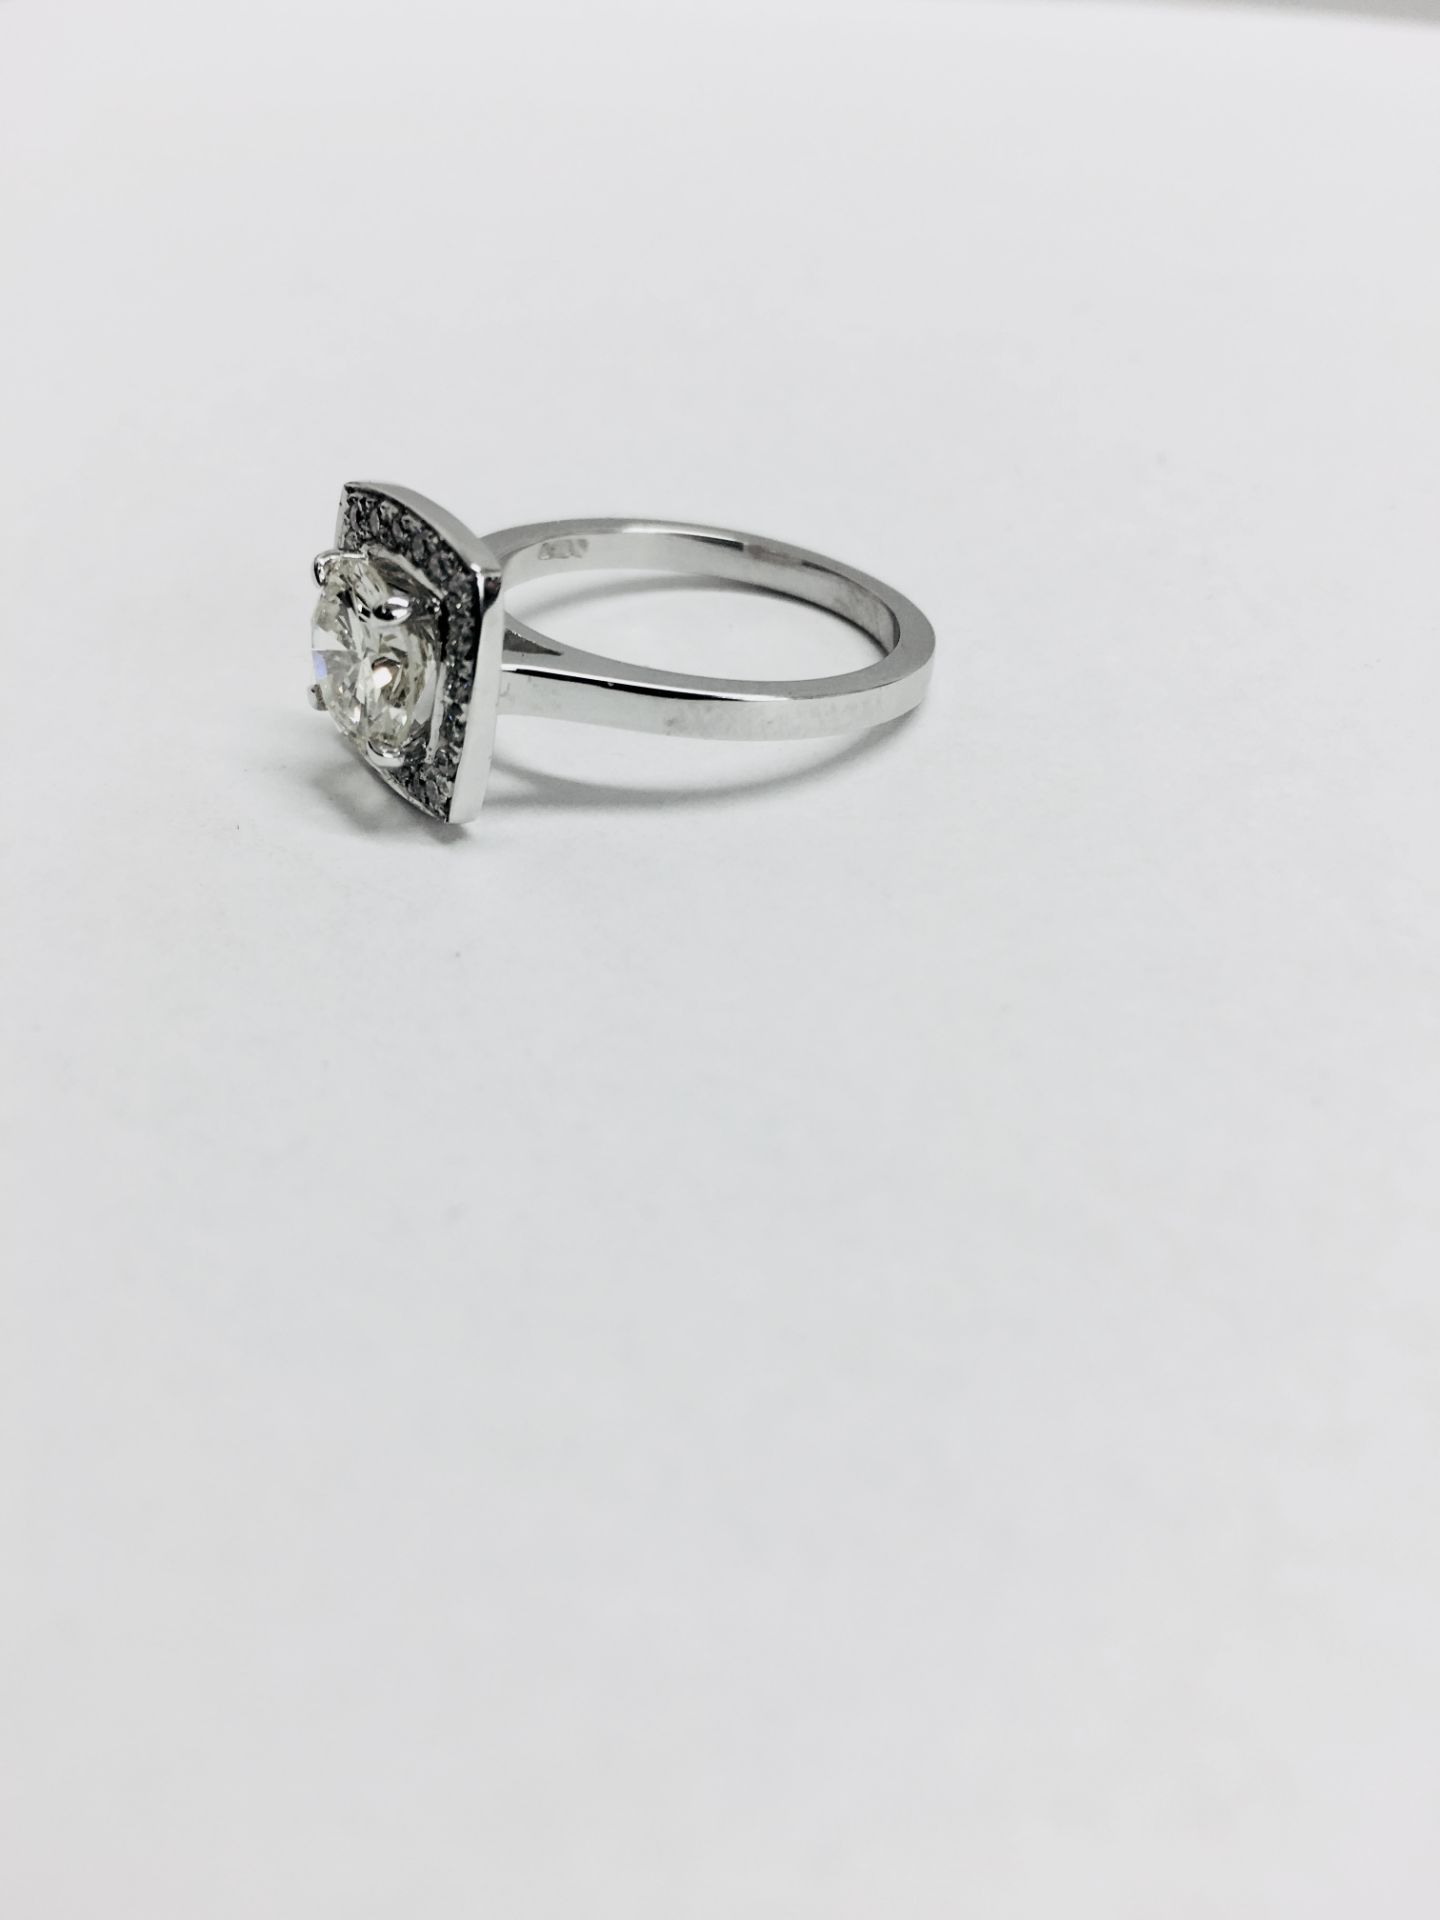 18ct white gold Handmade Halo style ring,0.50ct vvs1 grade g colour diamond,18ct white gold settig - Image 2 of 6